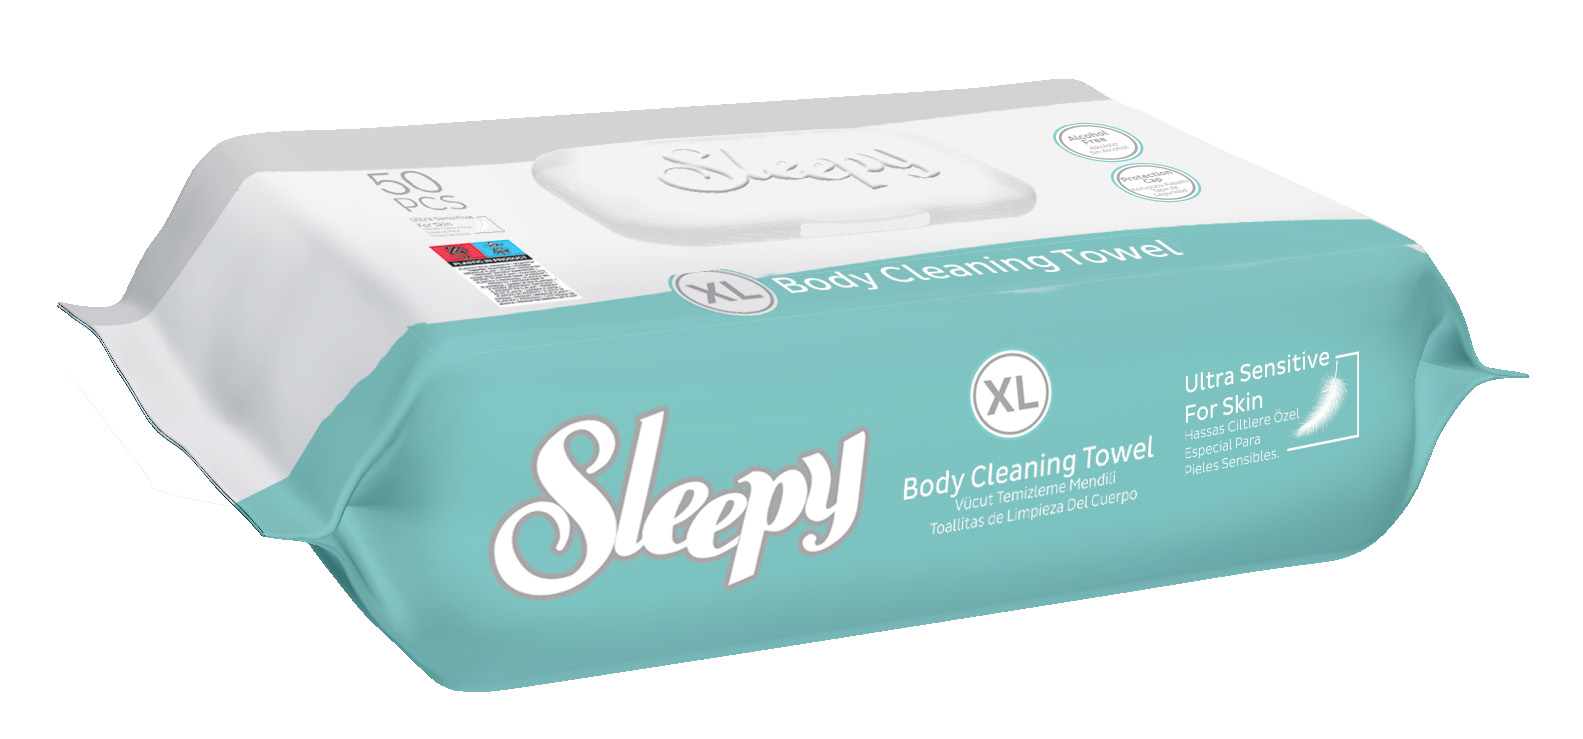 sleepy-body-cleaning-towel